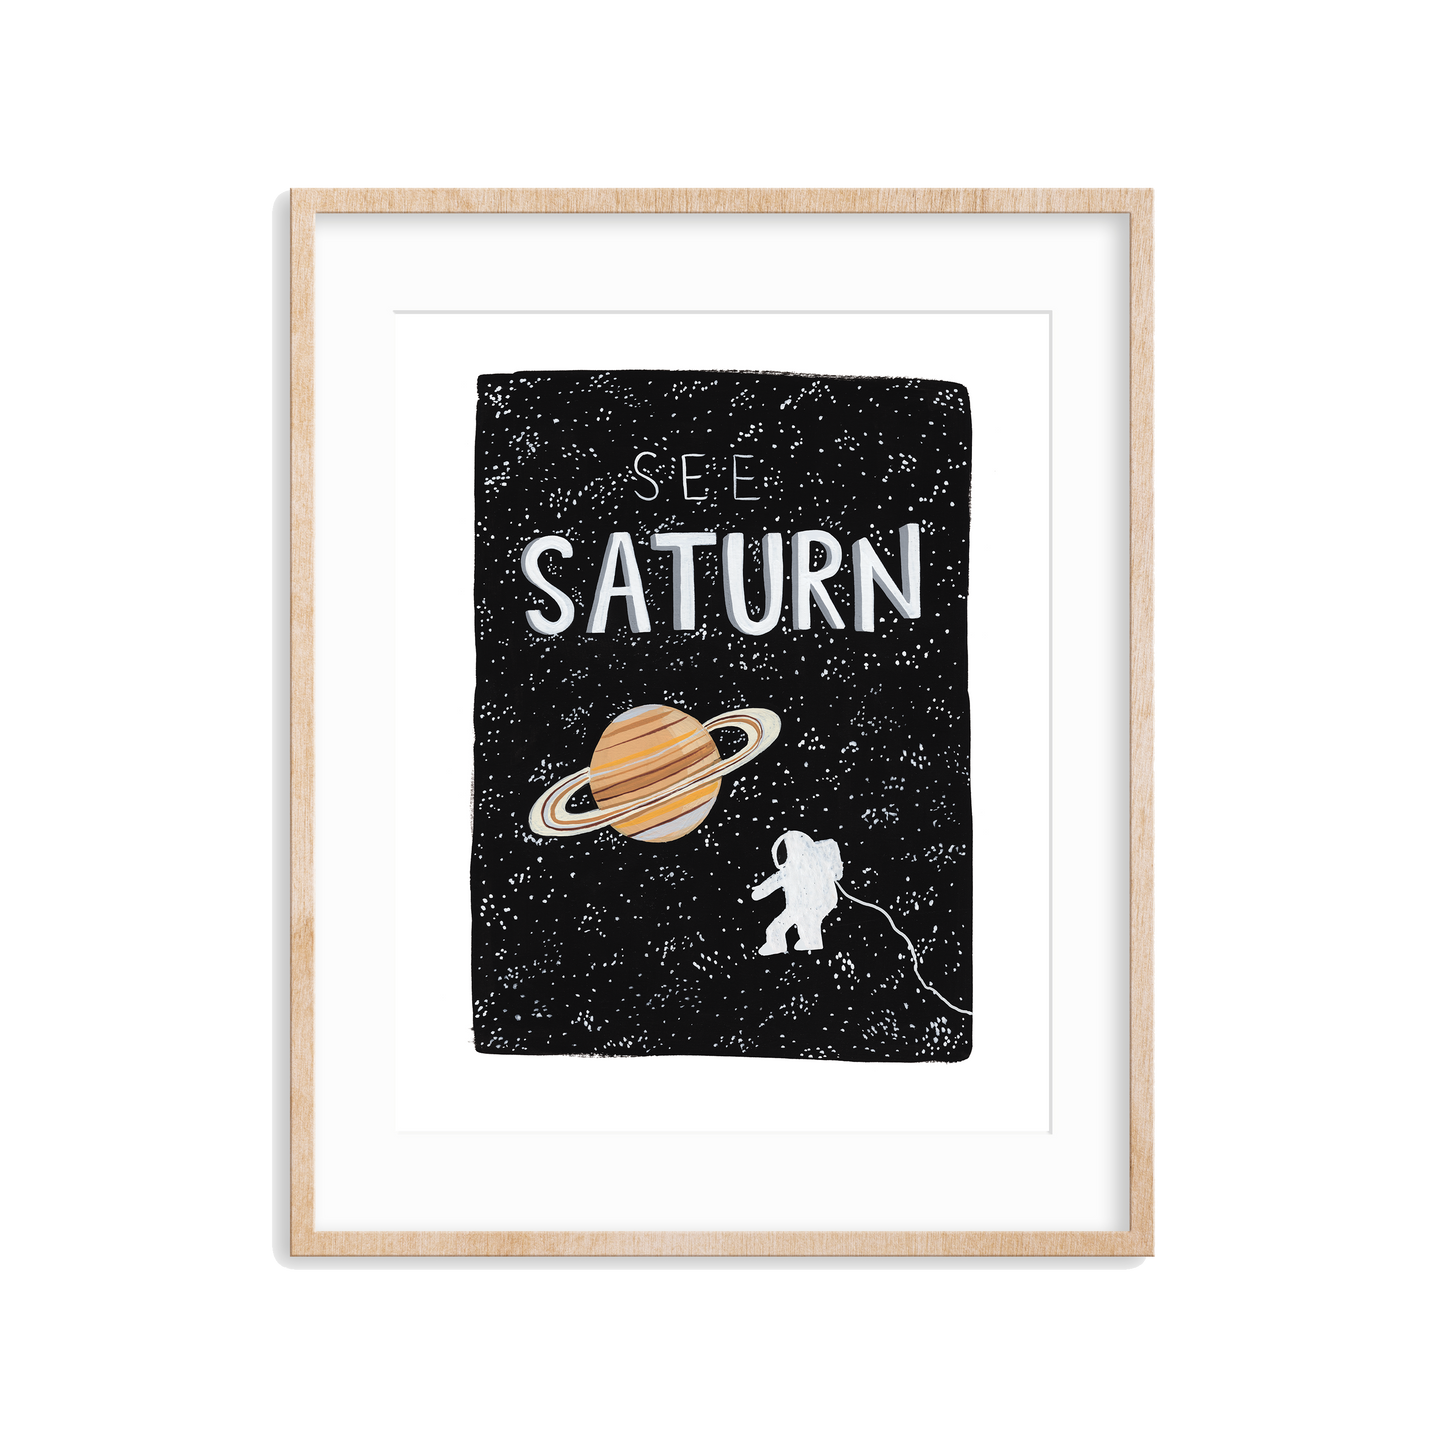 See Saturn Astronaut Art Print